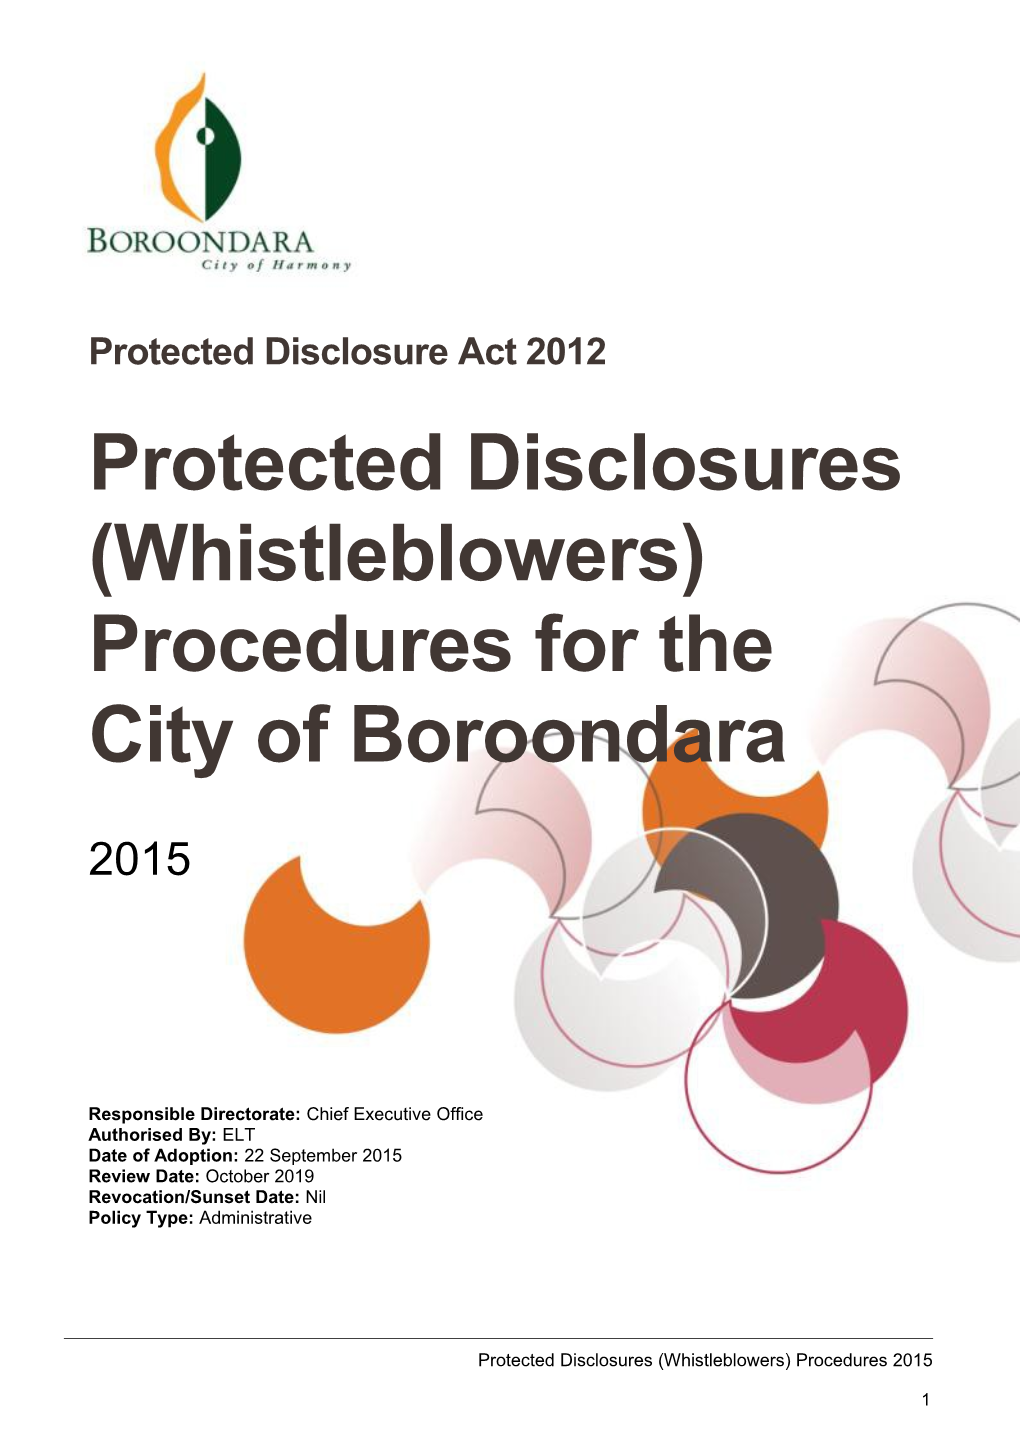 Protected Disclosures (Whistleblowers) Procedures